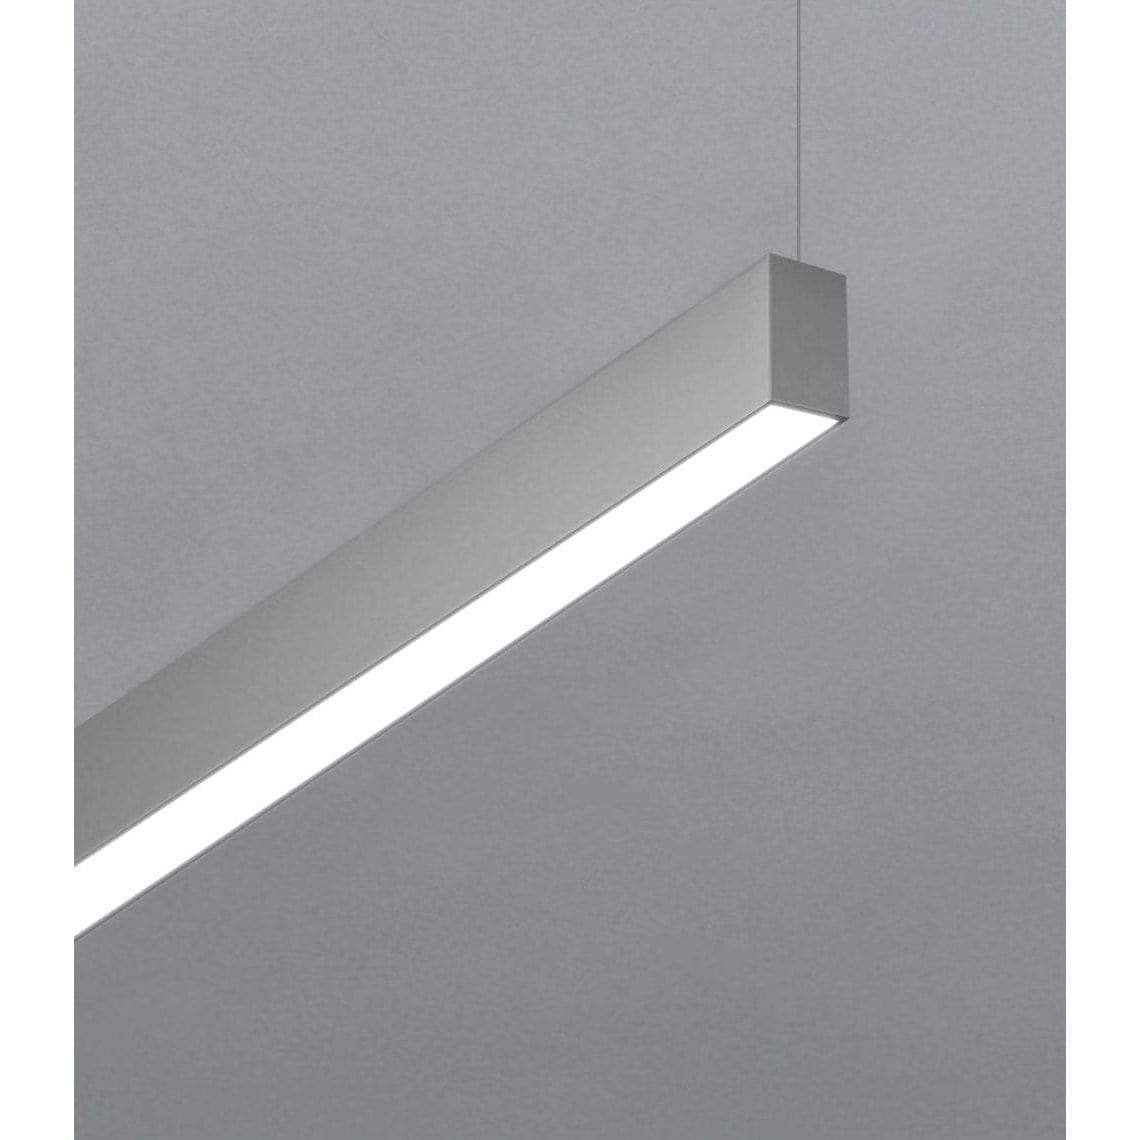 POE Texas Lighting Denton Suspended Linear PoE Lights - Sample 1.3" x 8' Linear Diffuser 8 ft, 3500K (Wall)